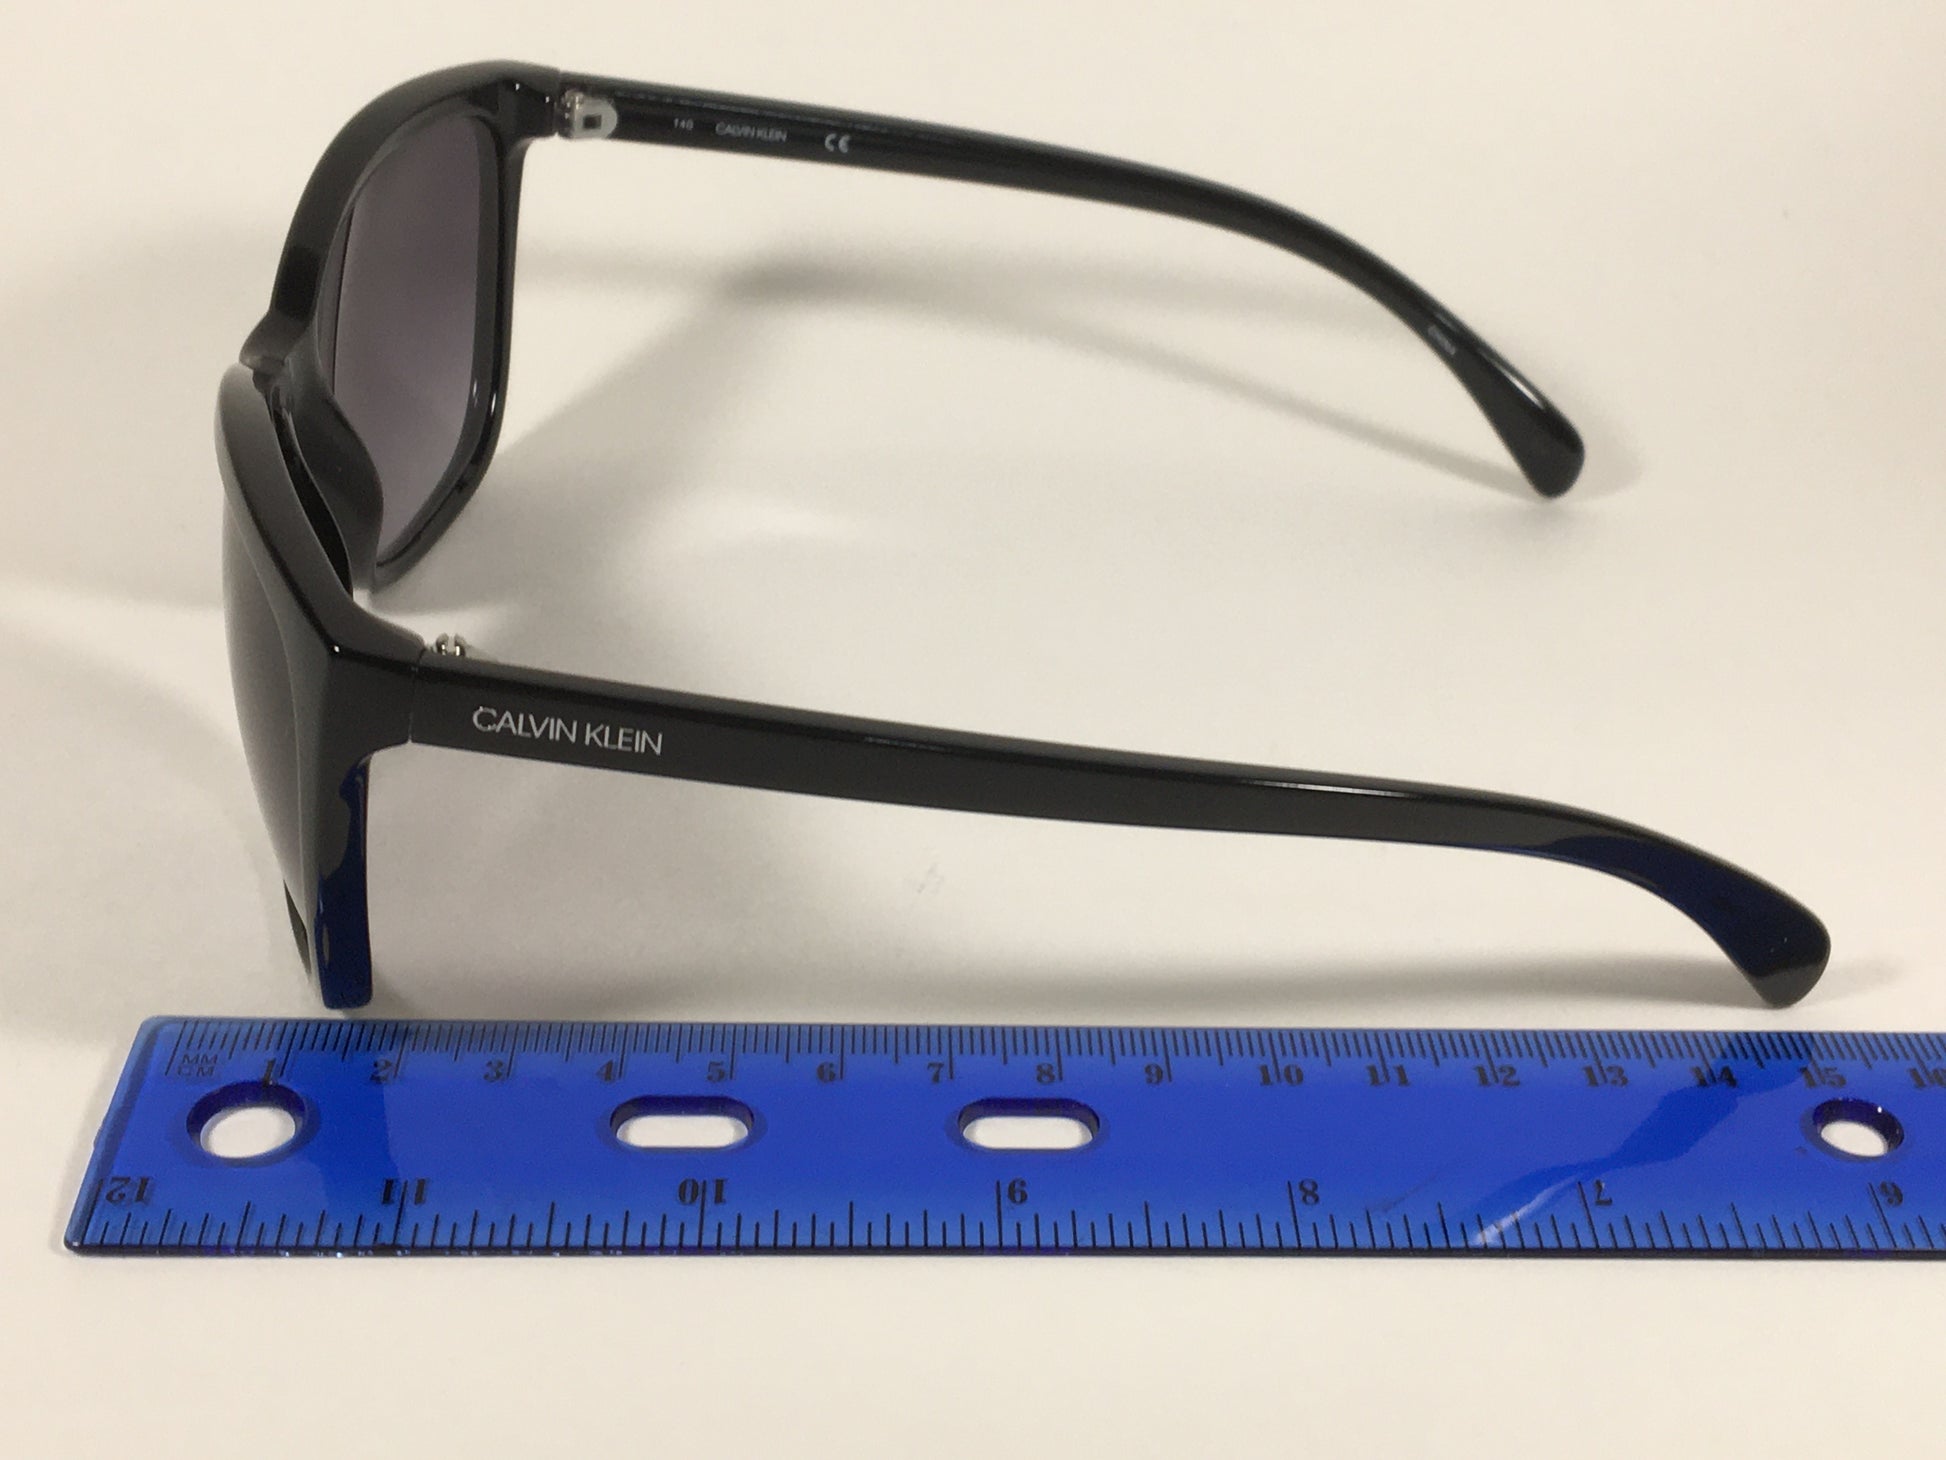 Calvin Klein Cat Eye Sunglasses CK19565S 001 Black Gloss Smoke Gradient Lens - Sunglasses